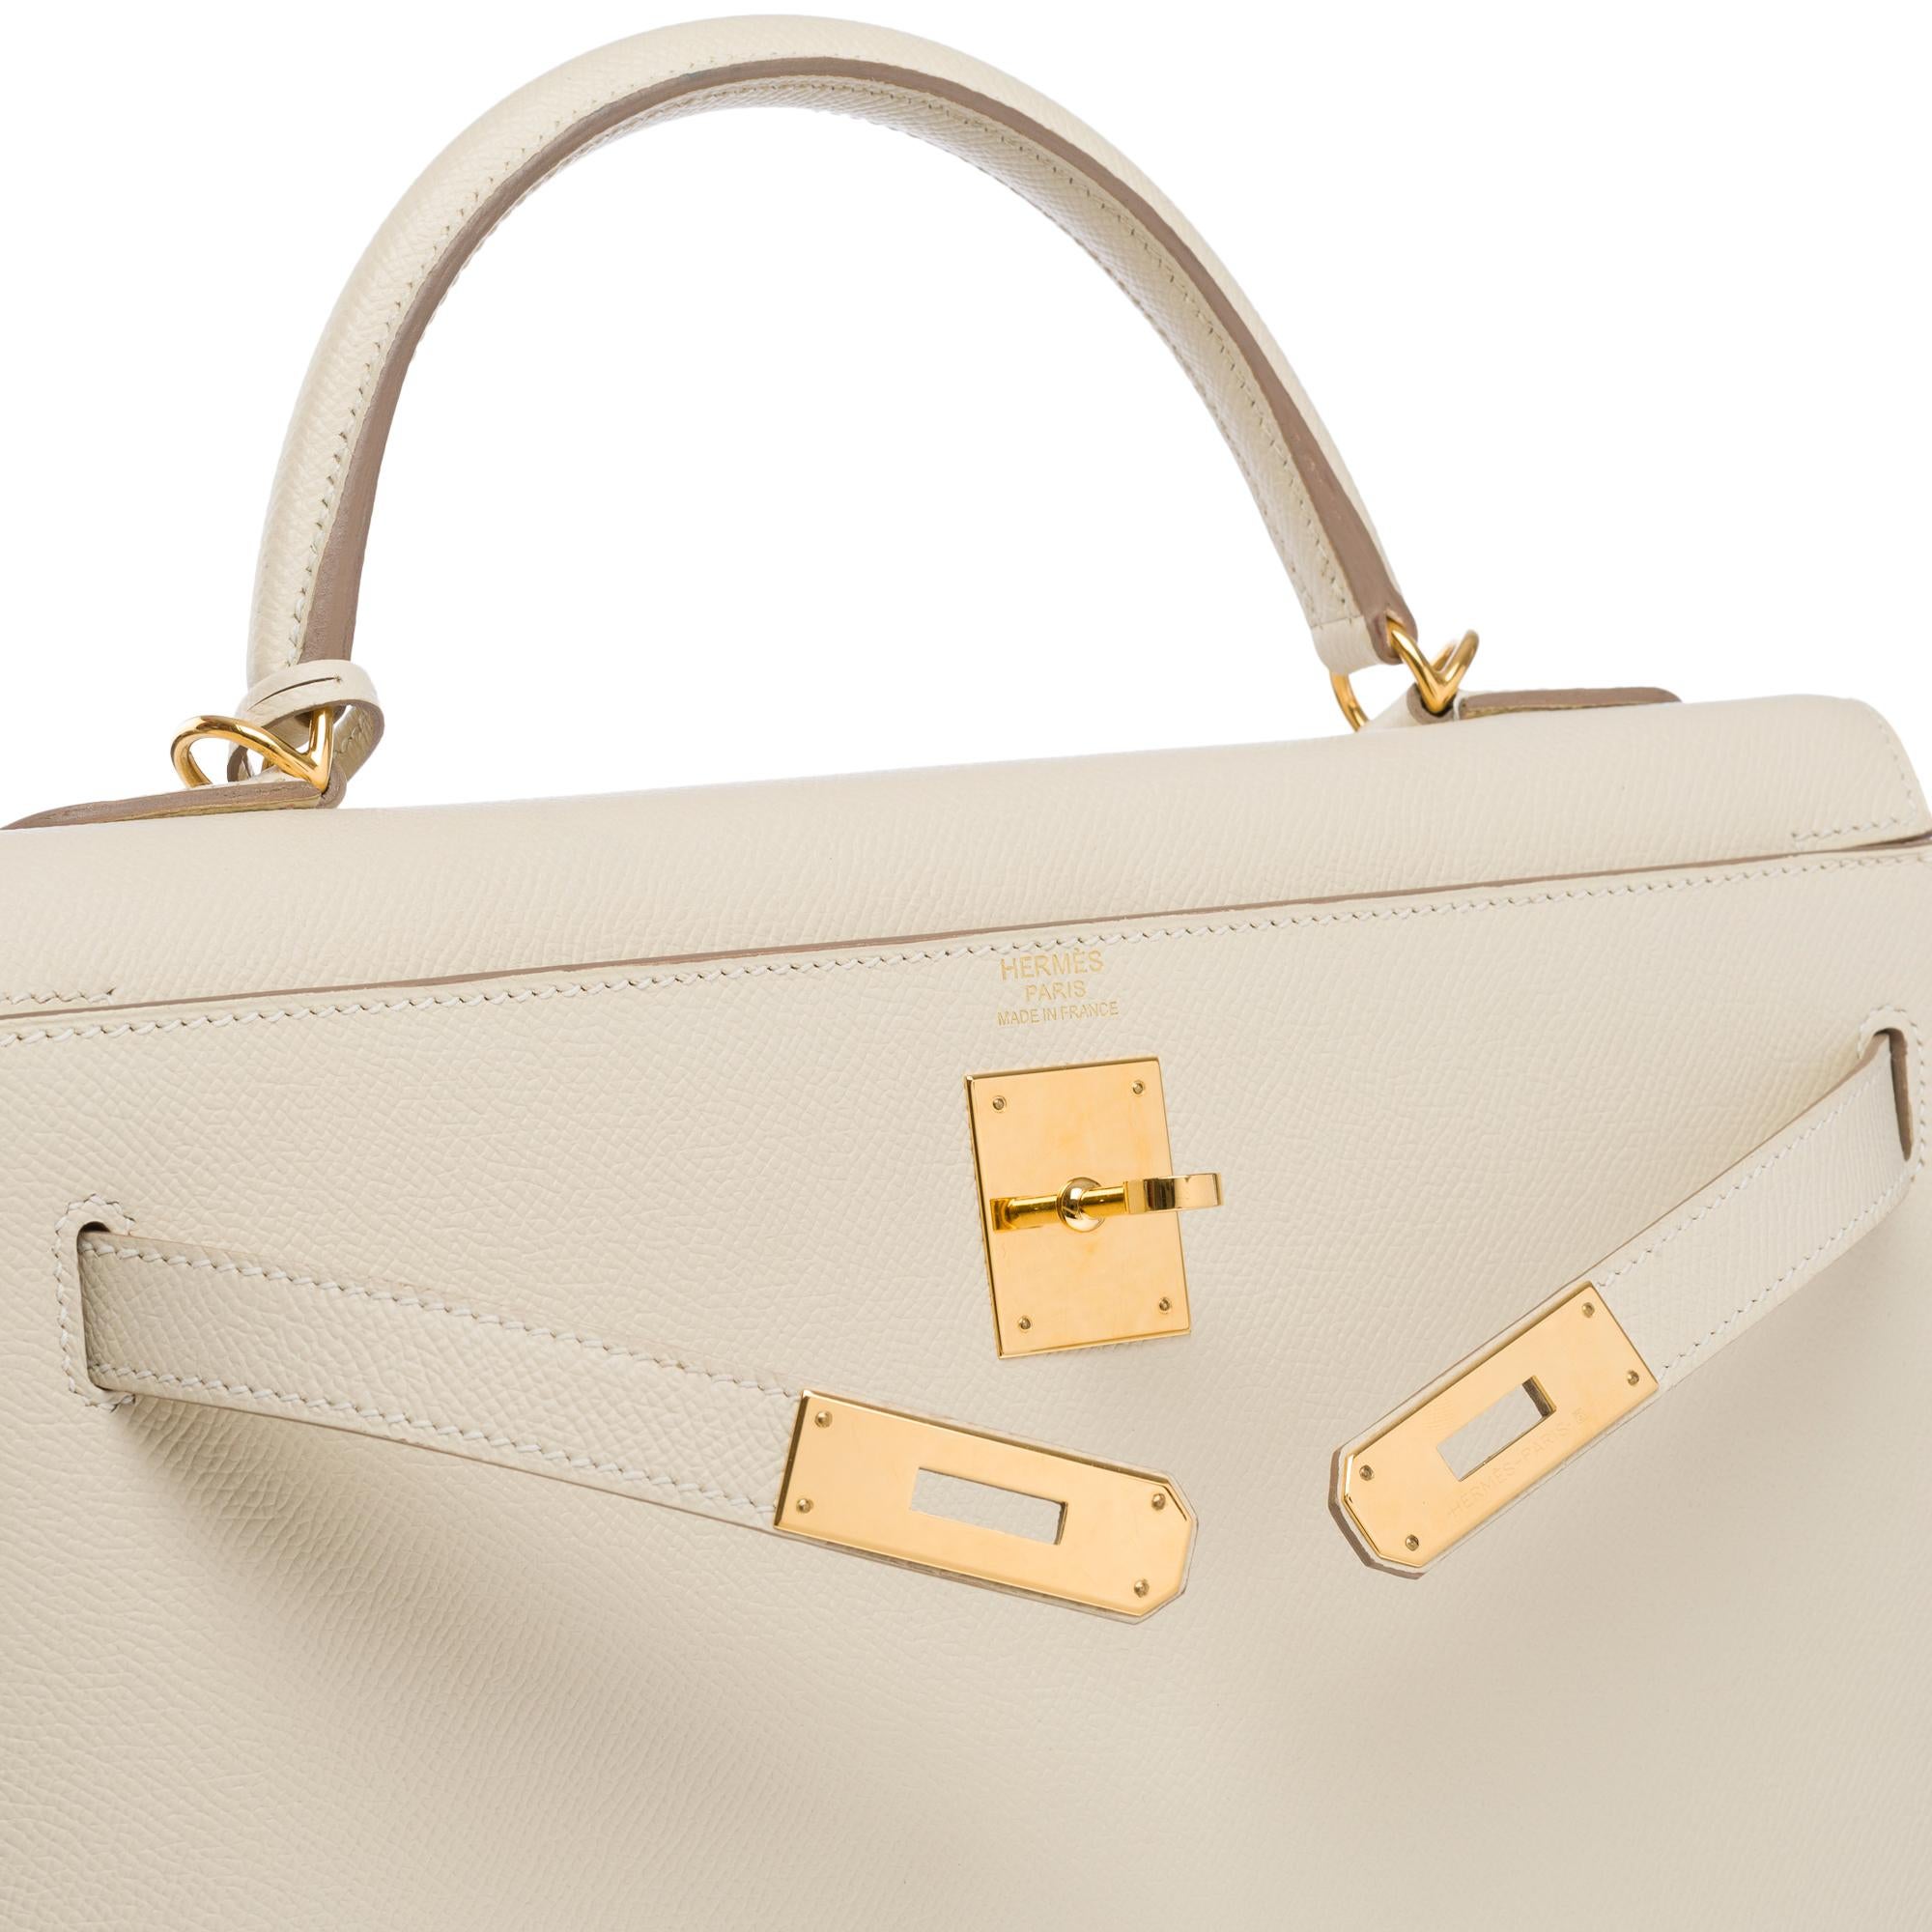 Stunning Hermès Kelly 32 sellier handbag strap in Craie epsom leather, GHW 4